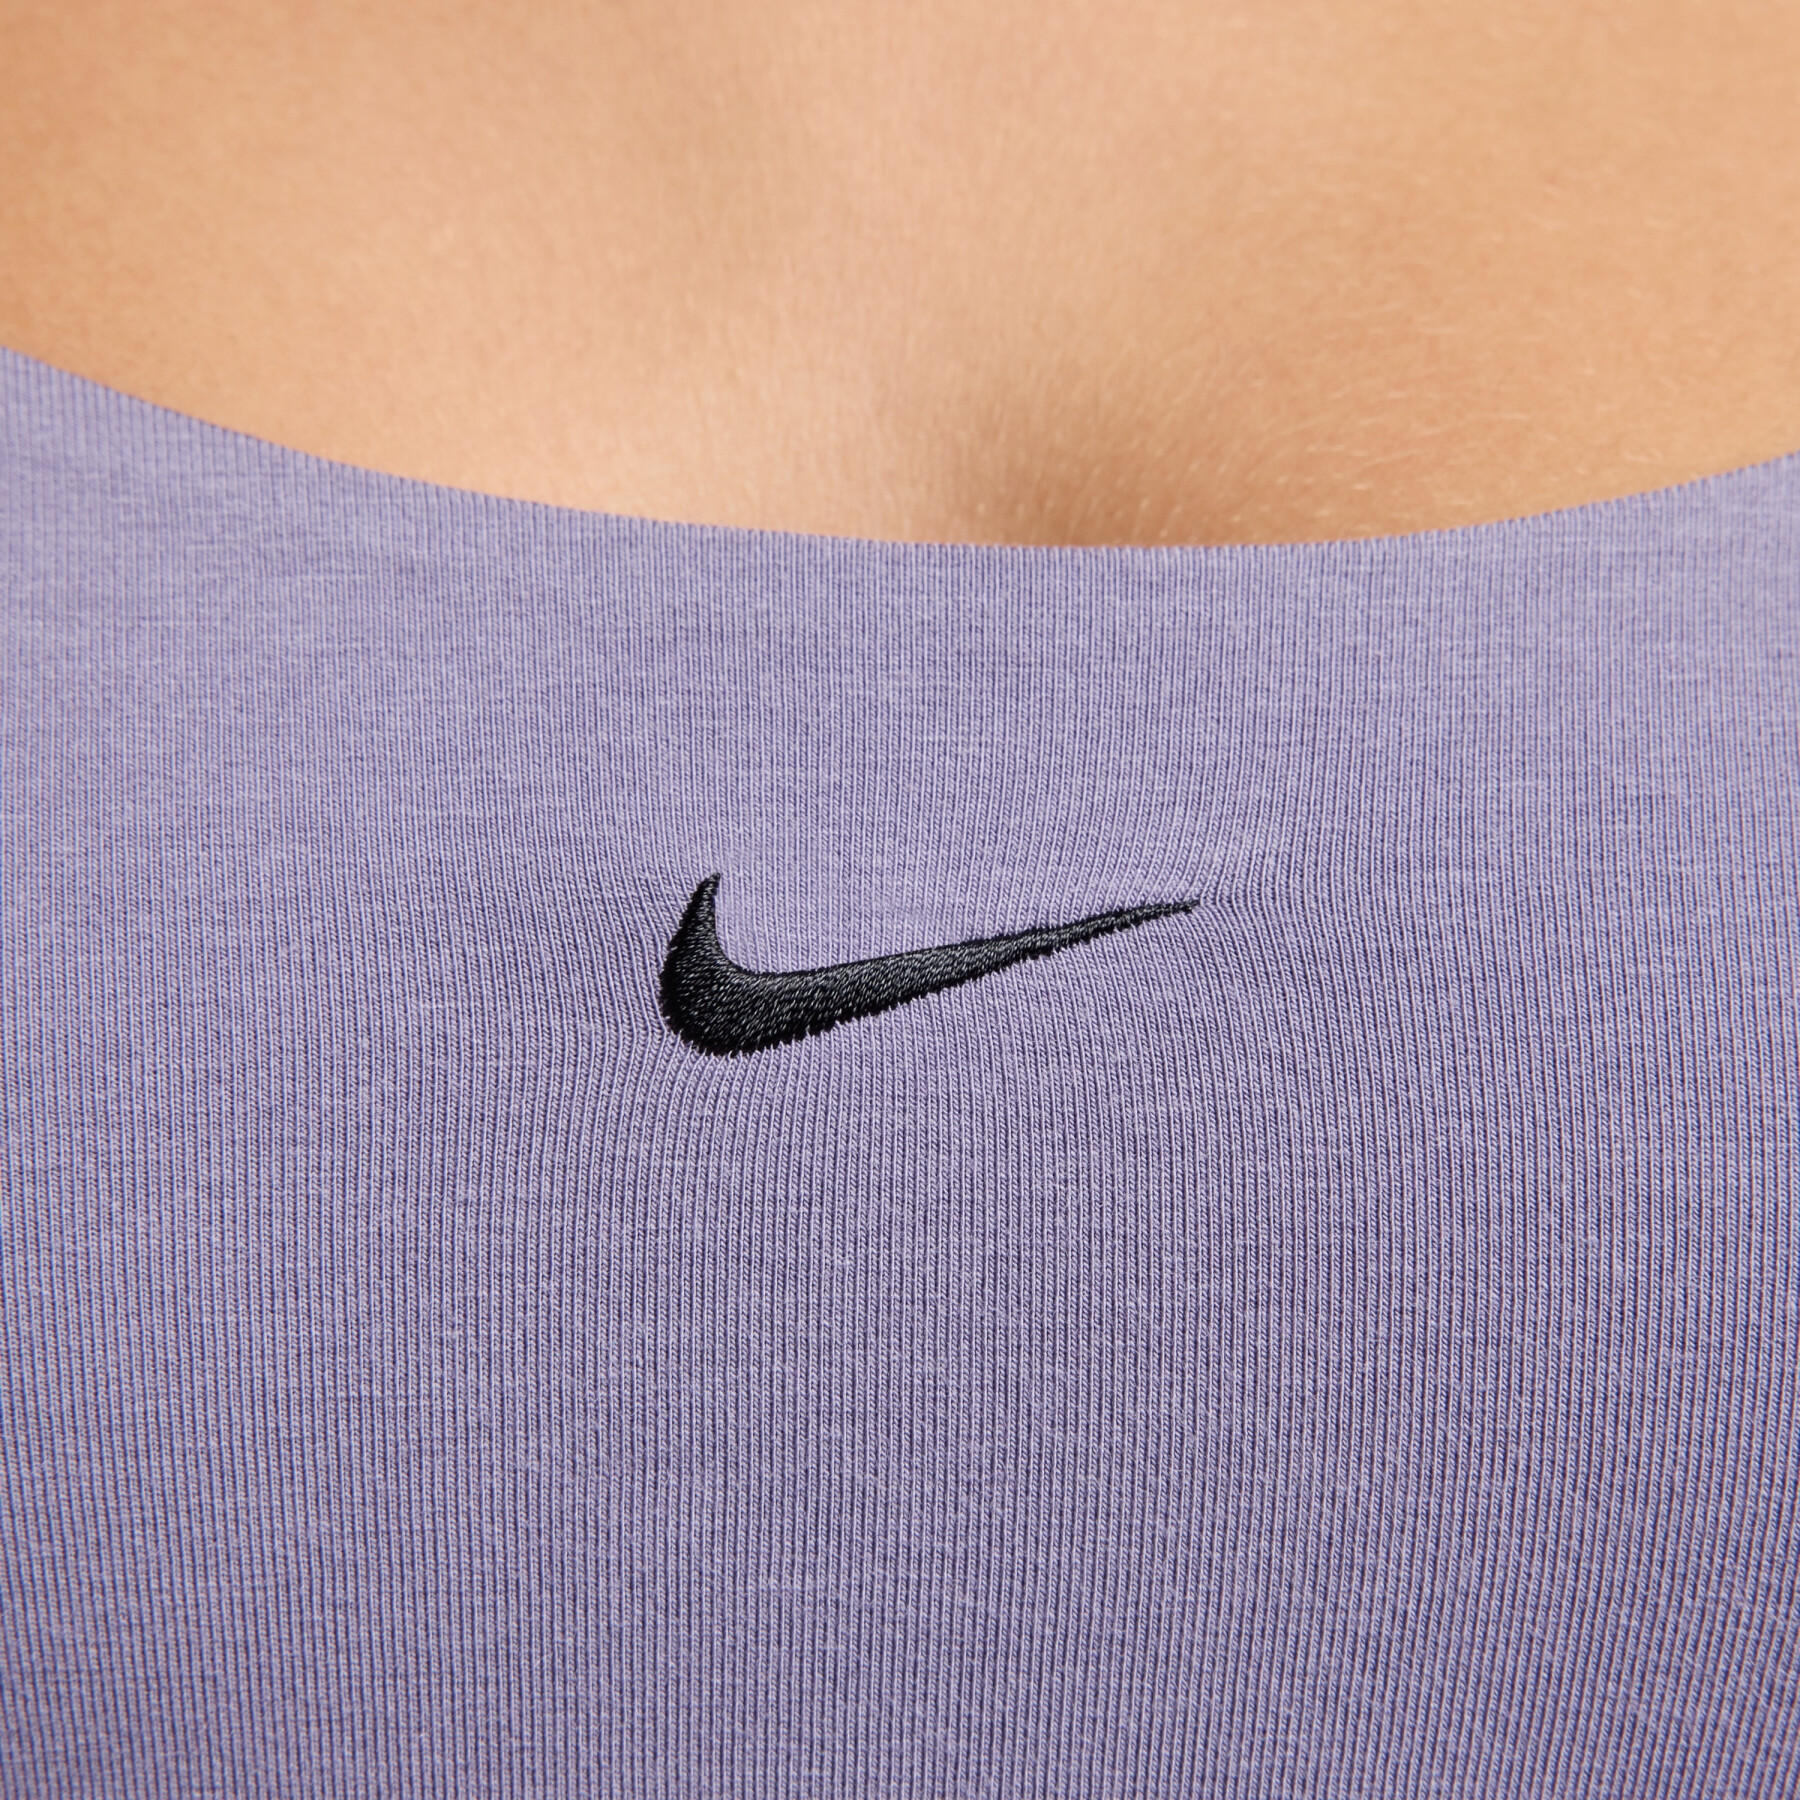 Women's tank top Nike Chill Knit